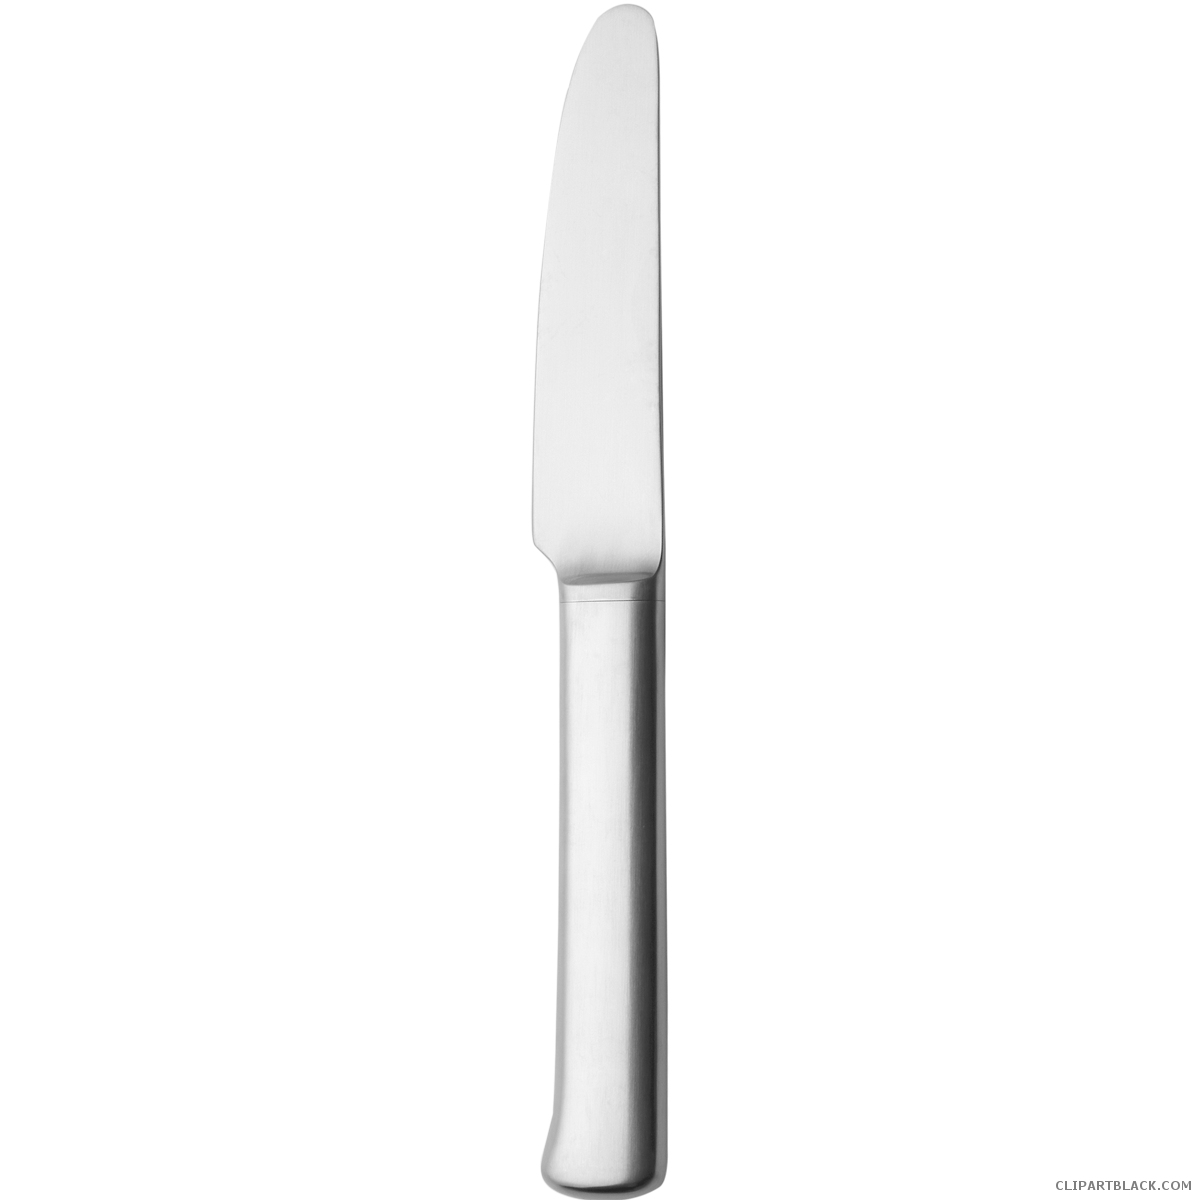 Clipartblack com tools free. White clipart knife